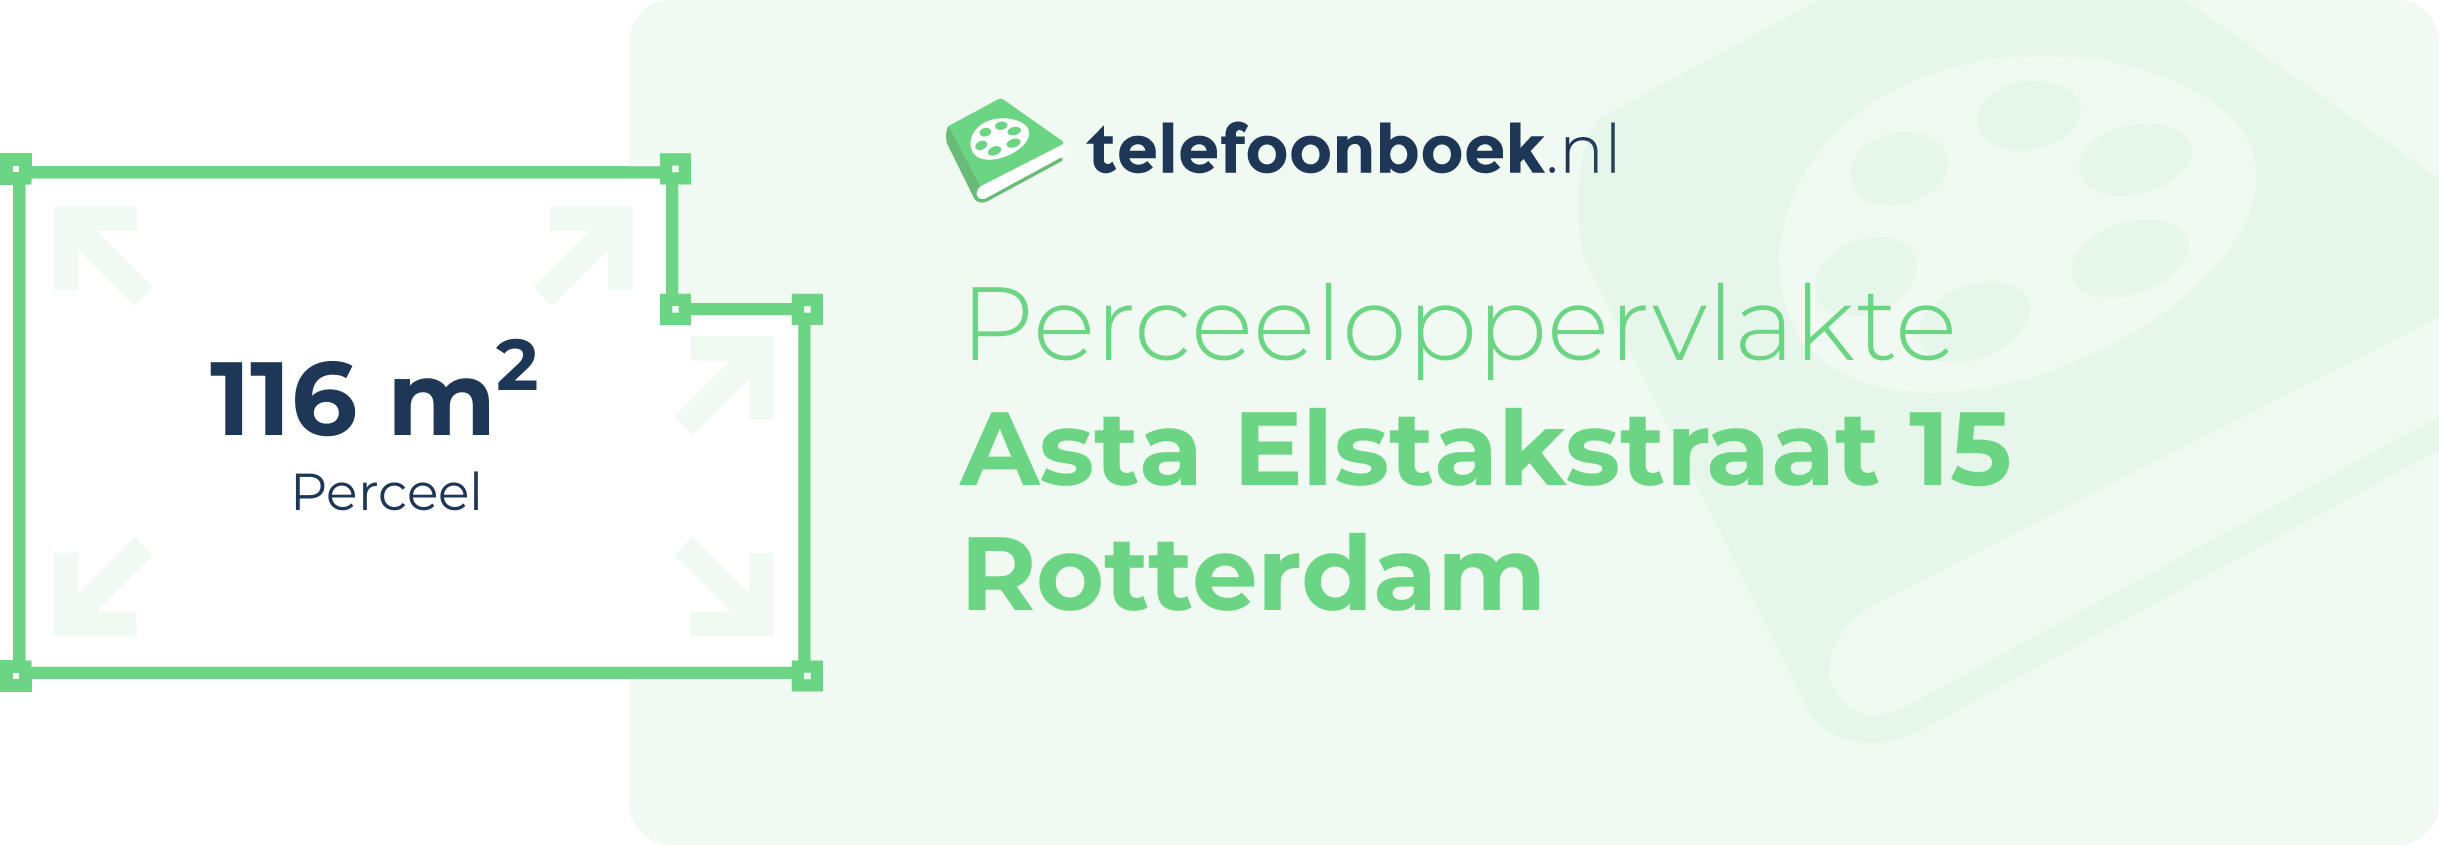 Perceeloppervlakte Asta Elstakstraat 15 Rotterdam